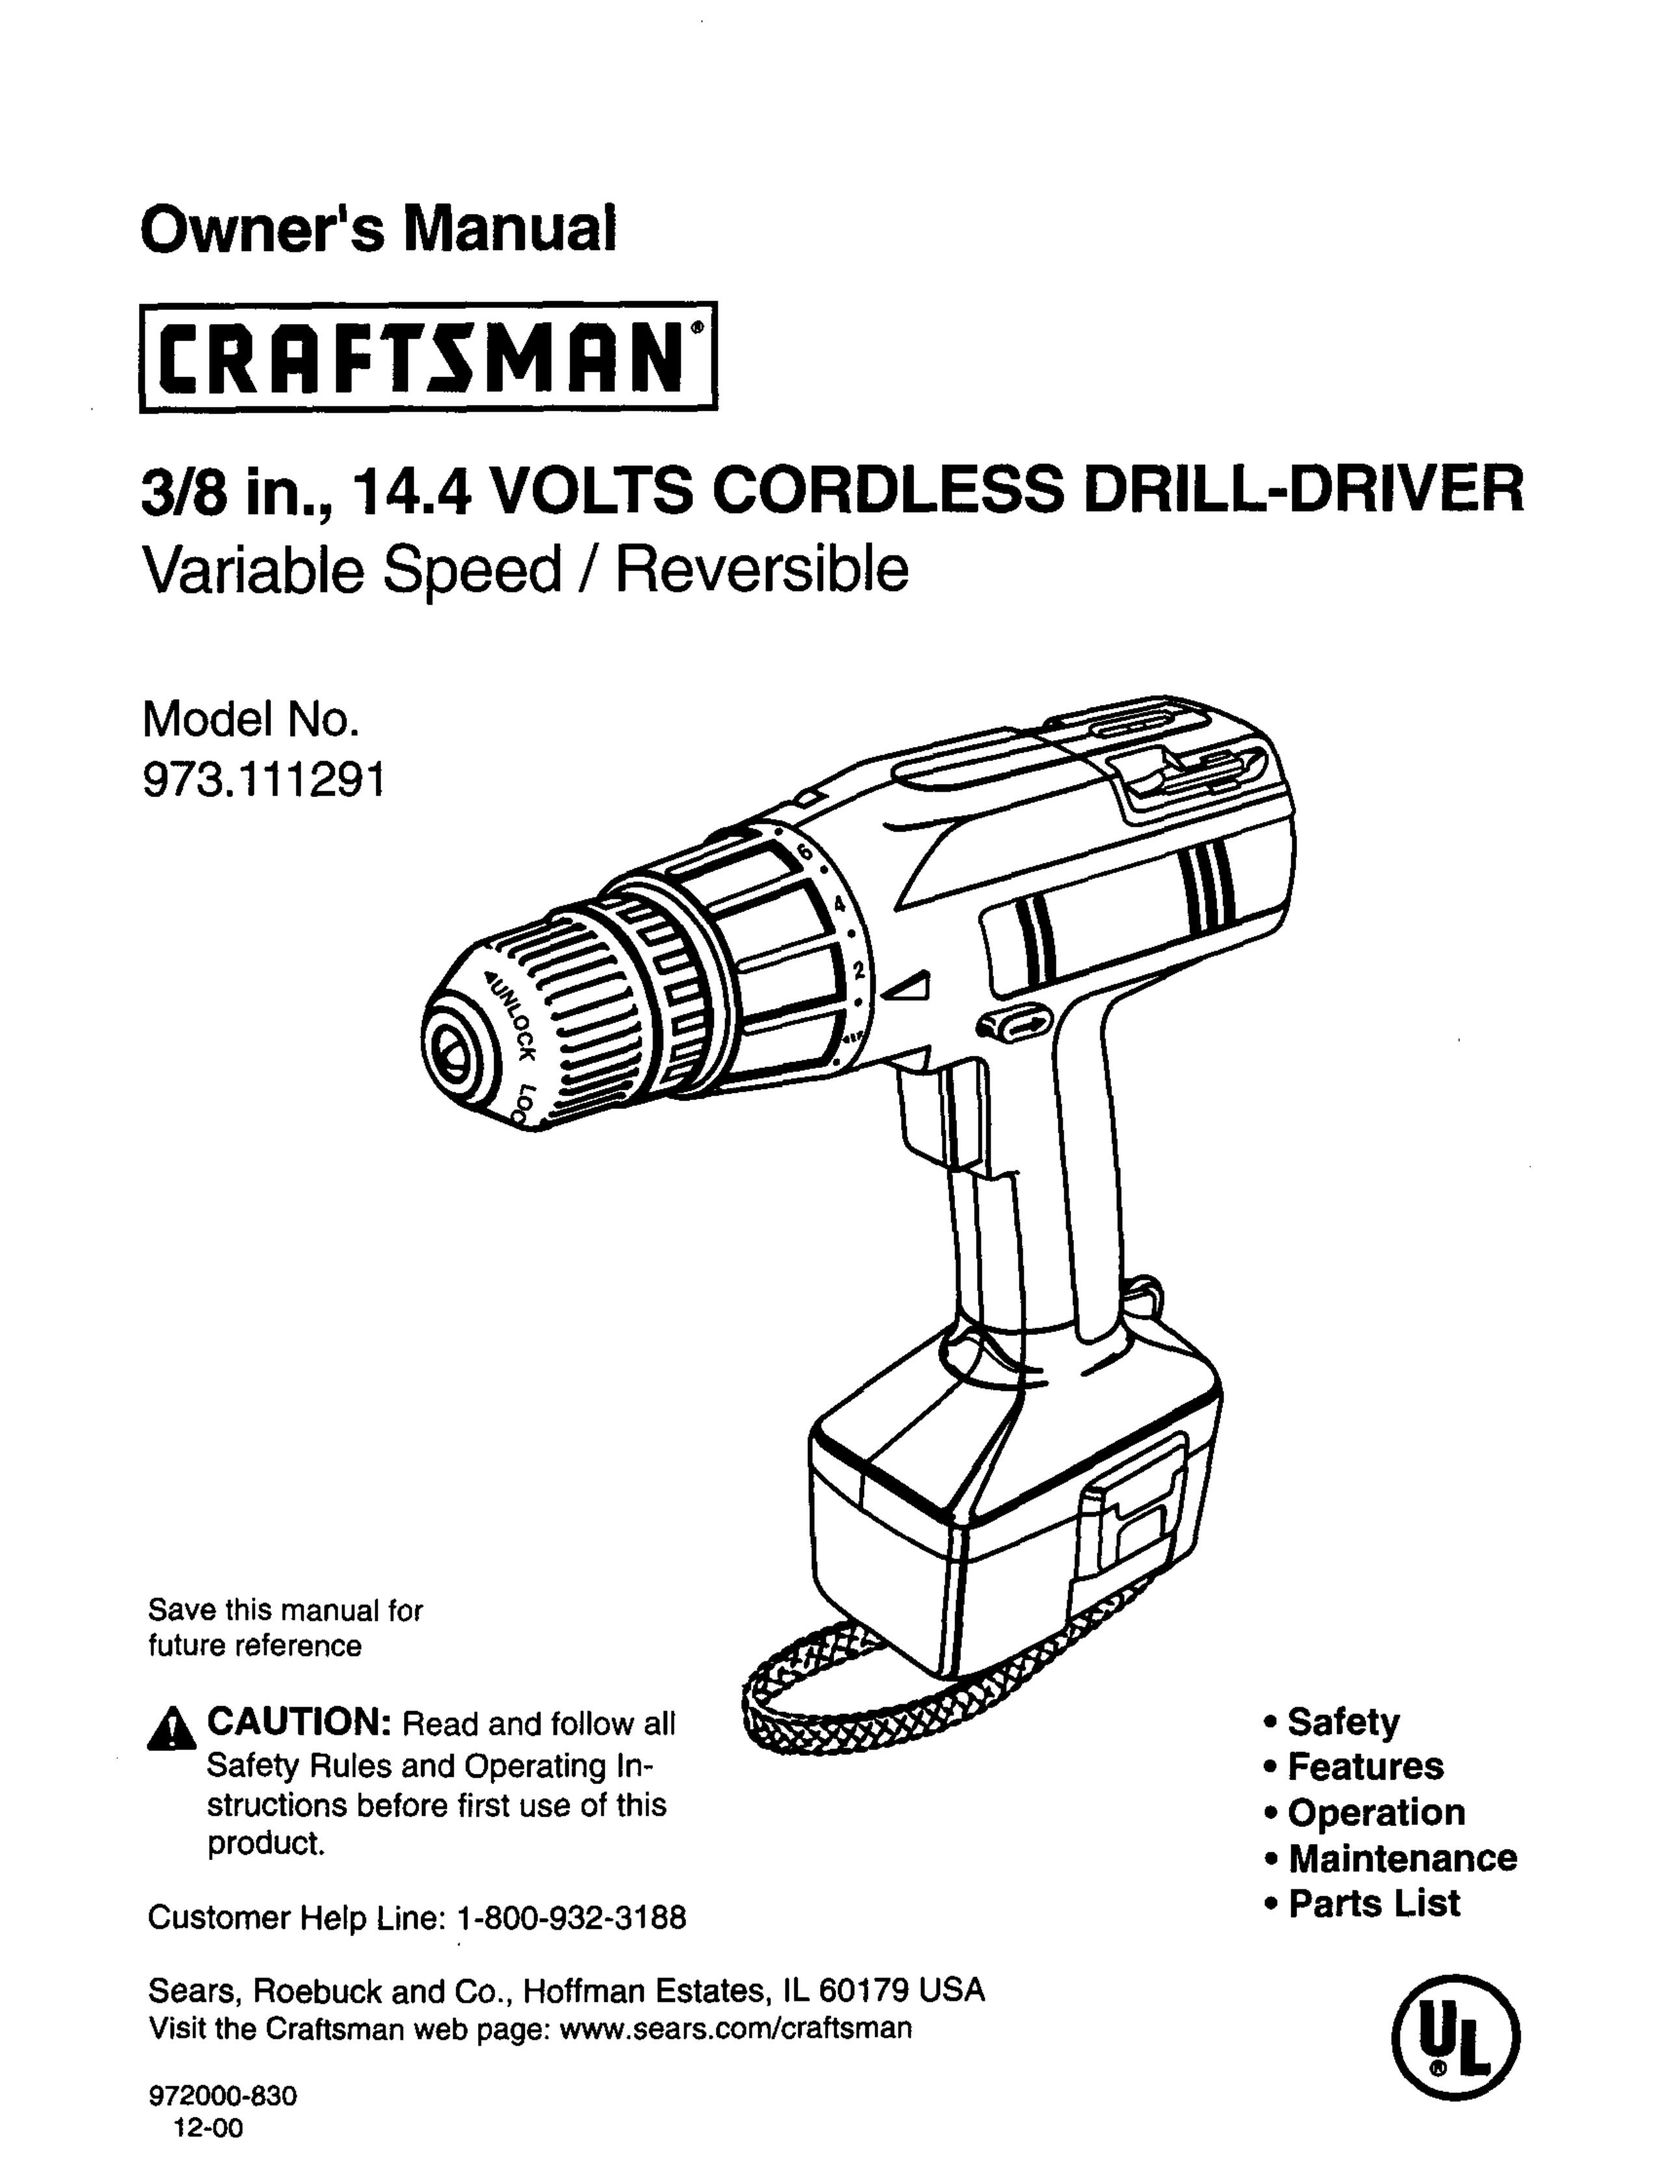 Craftsman 973.111291 Cordless Drill User Manual